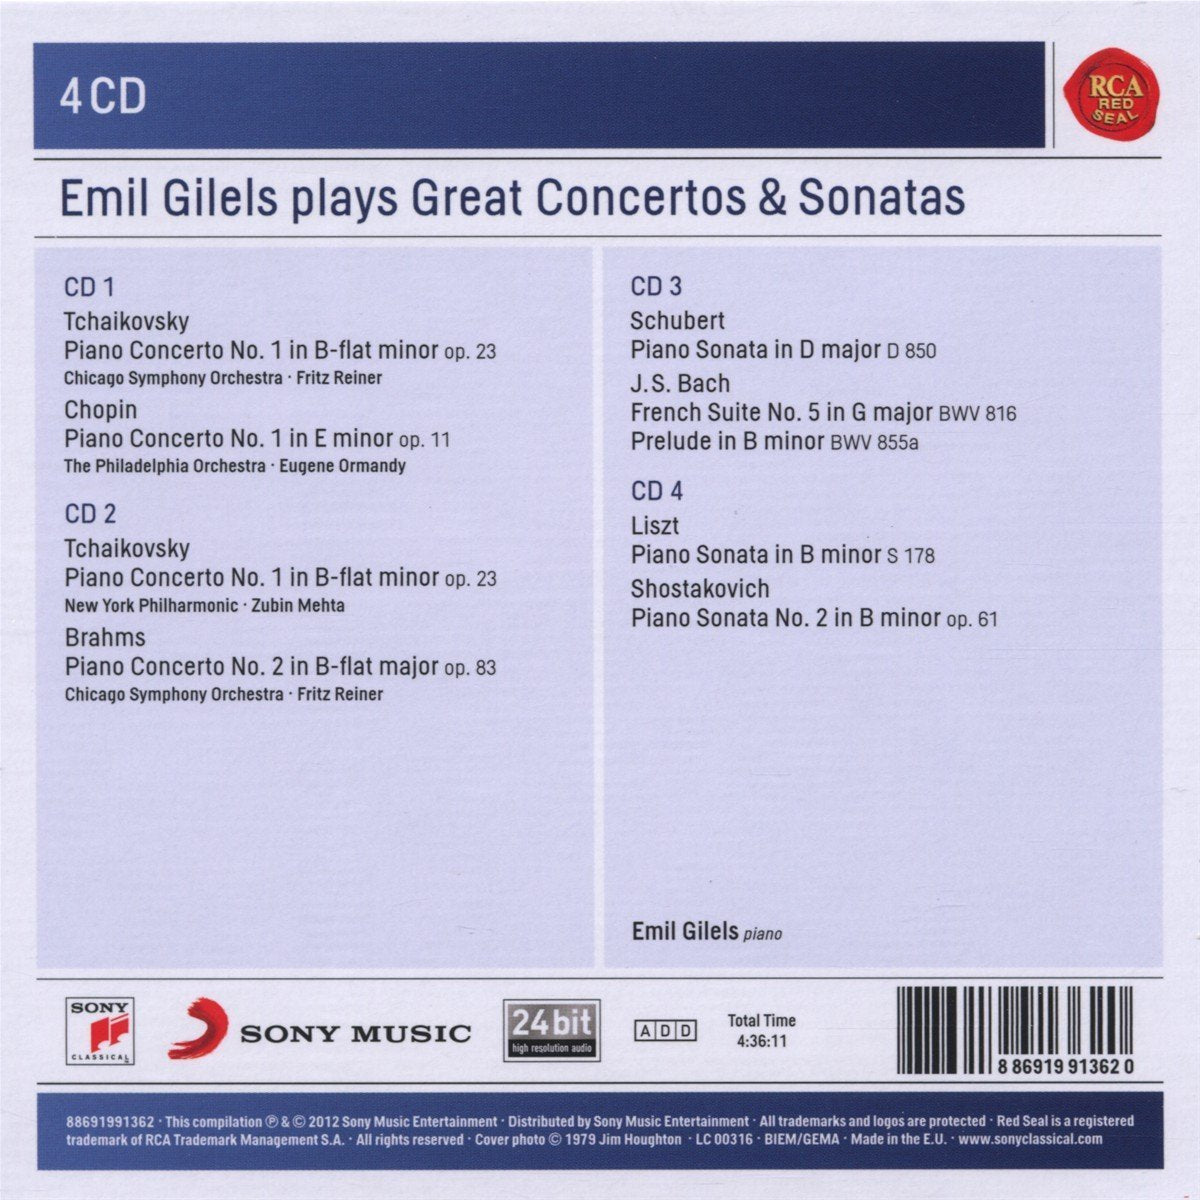 EMIL GILELS PLAYS GREAT CONCERTOS AND SONATAS - Bach, Brahms, Chopin, Liszt, Schubert, Shostakovich, Tchaikovsky (5 CDs)